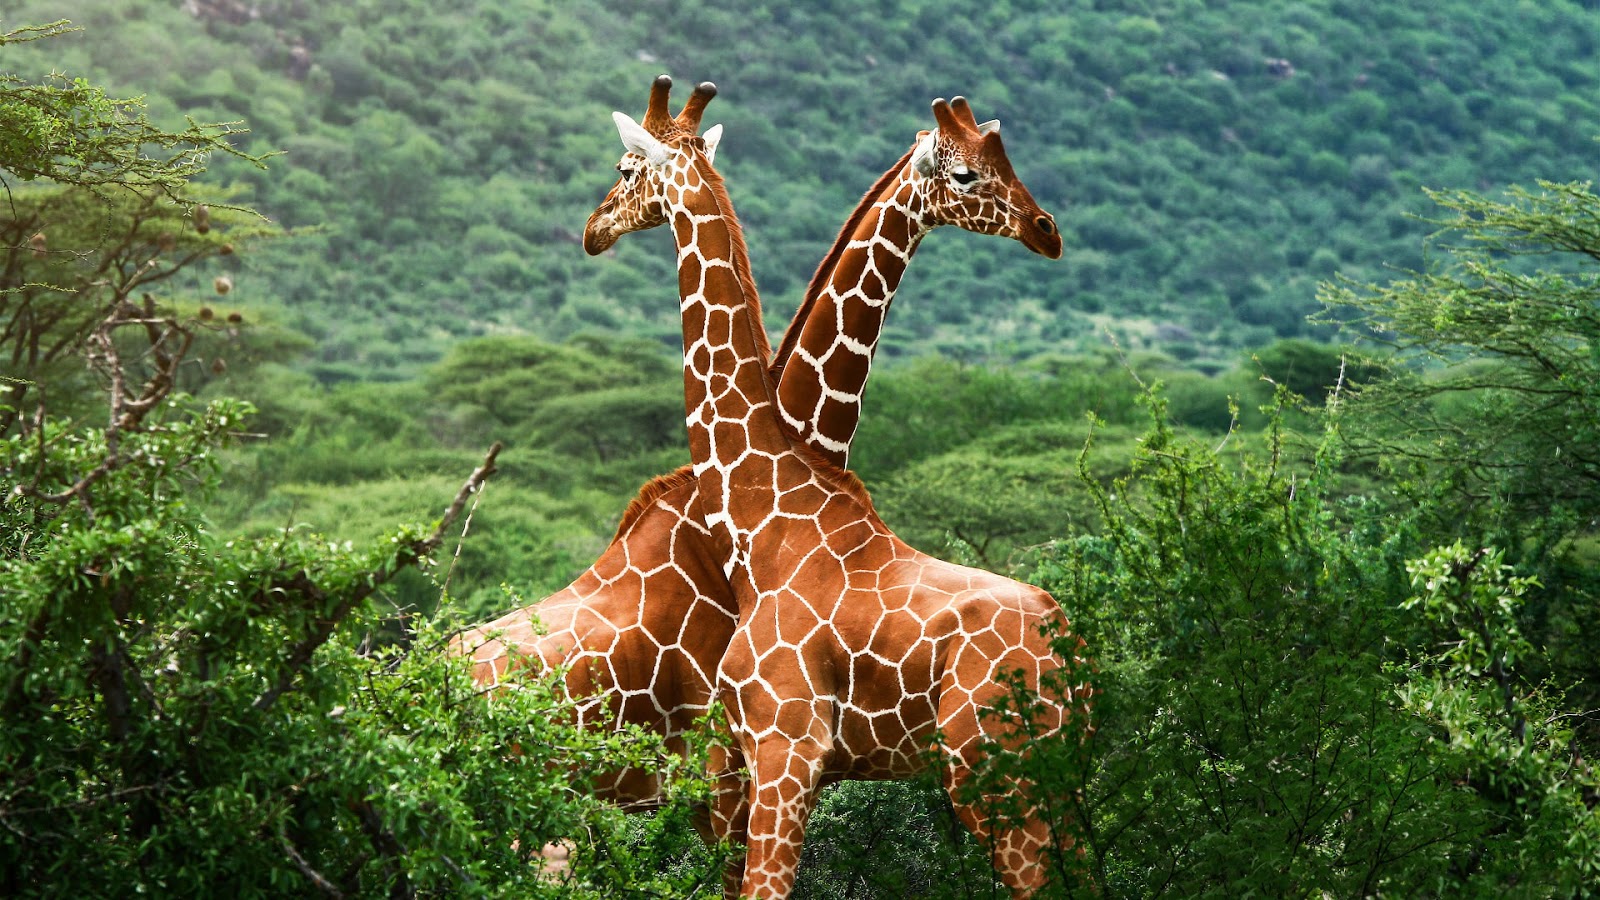 Giraffe with Blonde Fur - wide 1